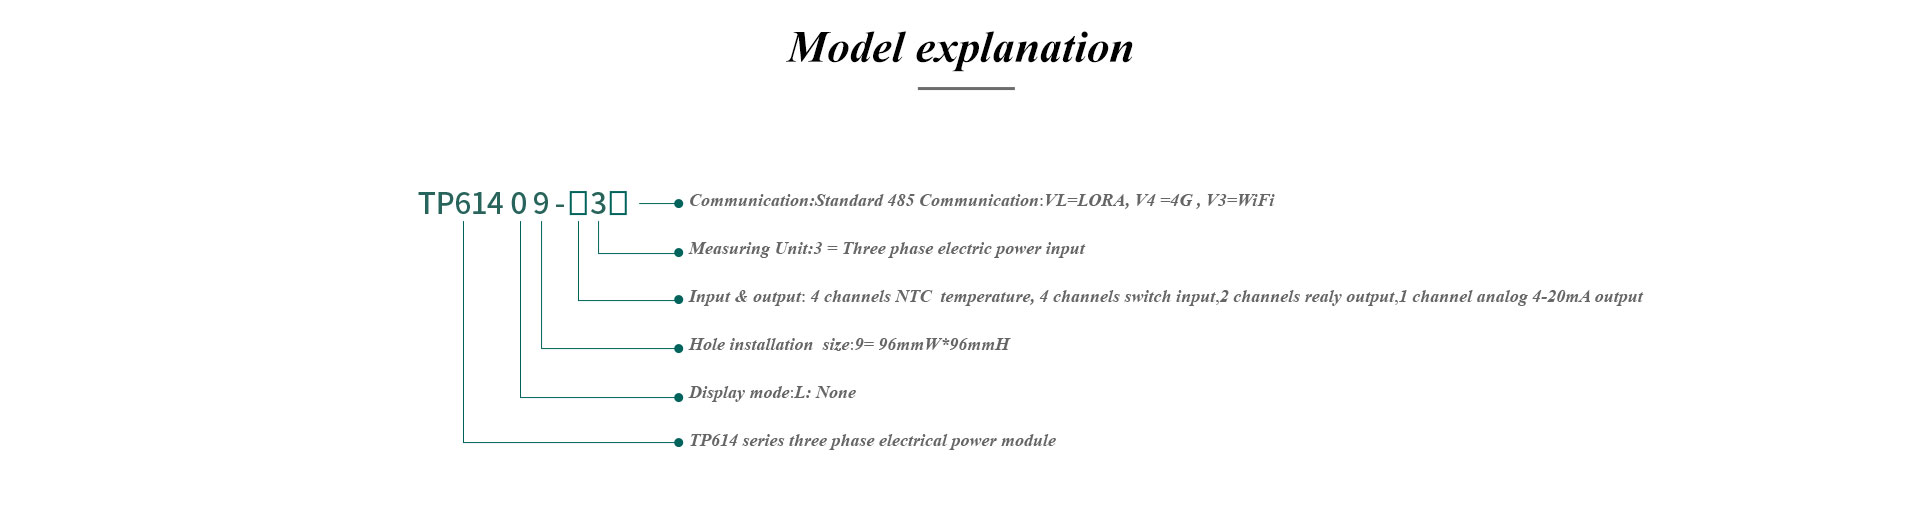 Multi-function Electrical power module